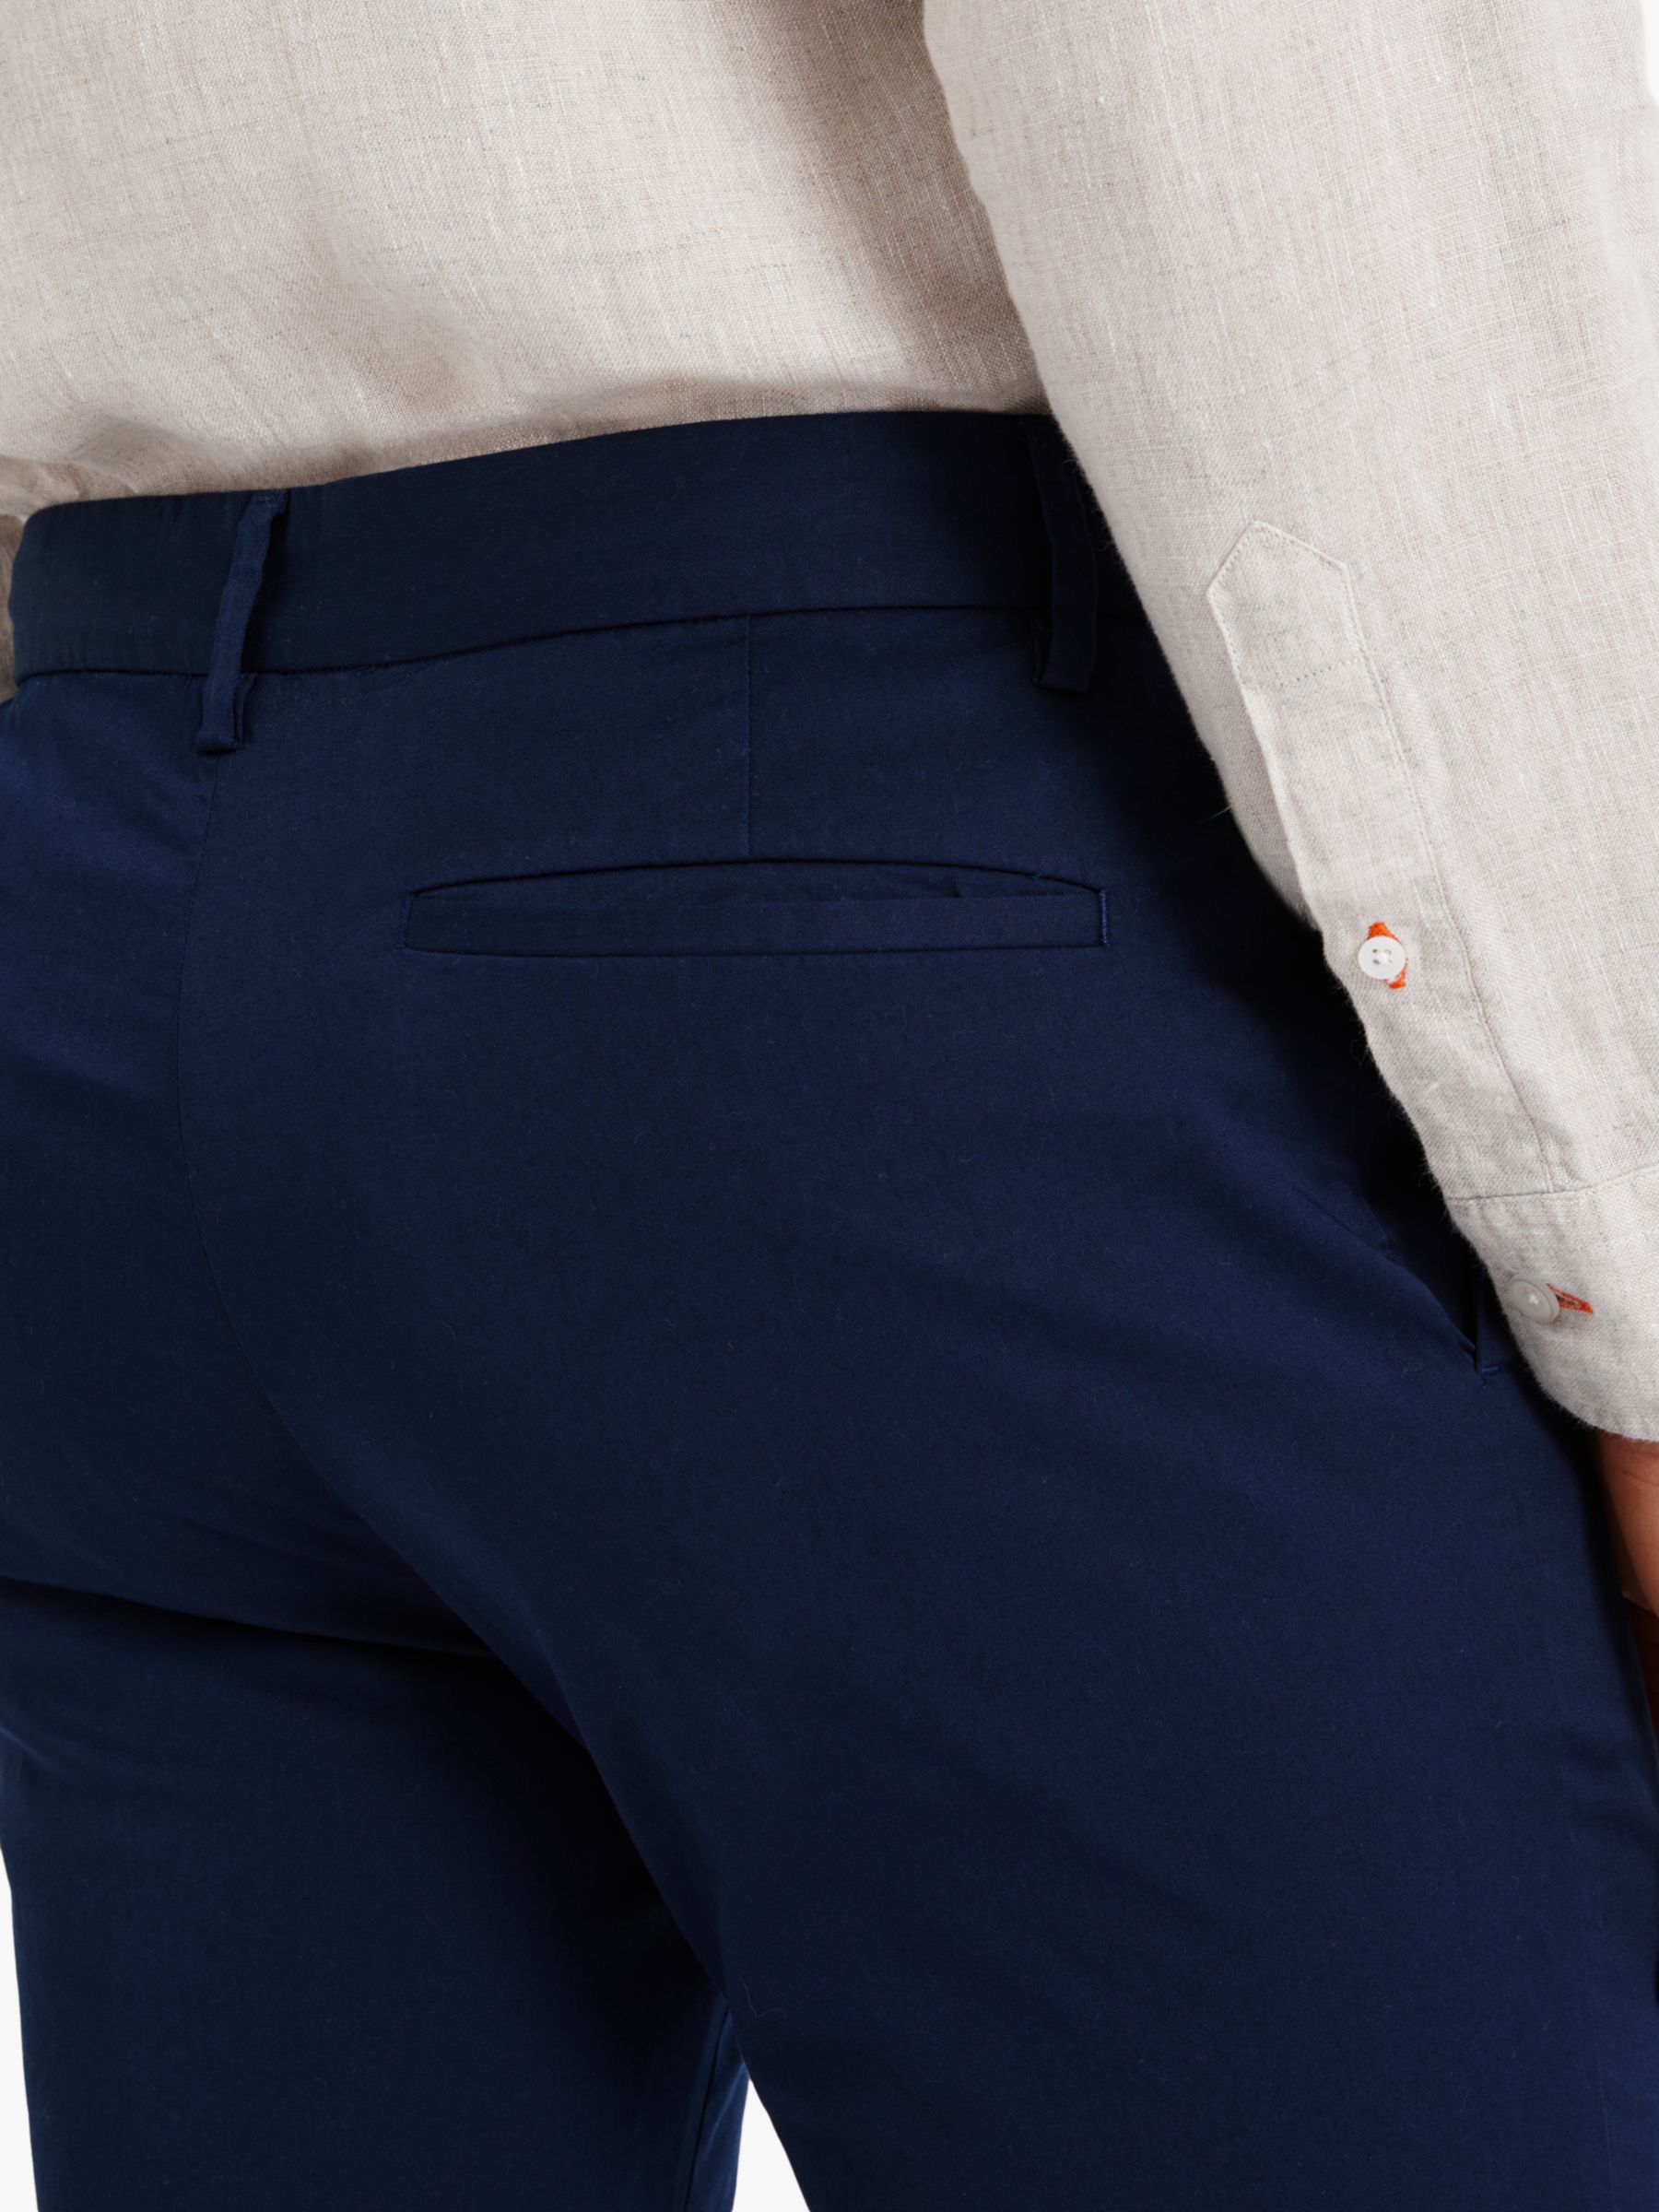 Buy SPOKE Lightweights Cotton Blend Regular Thigh Trousers Online at johnlewis.com